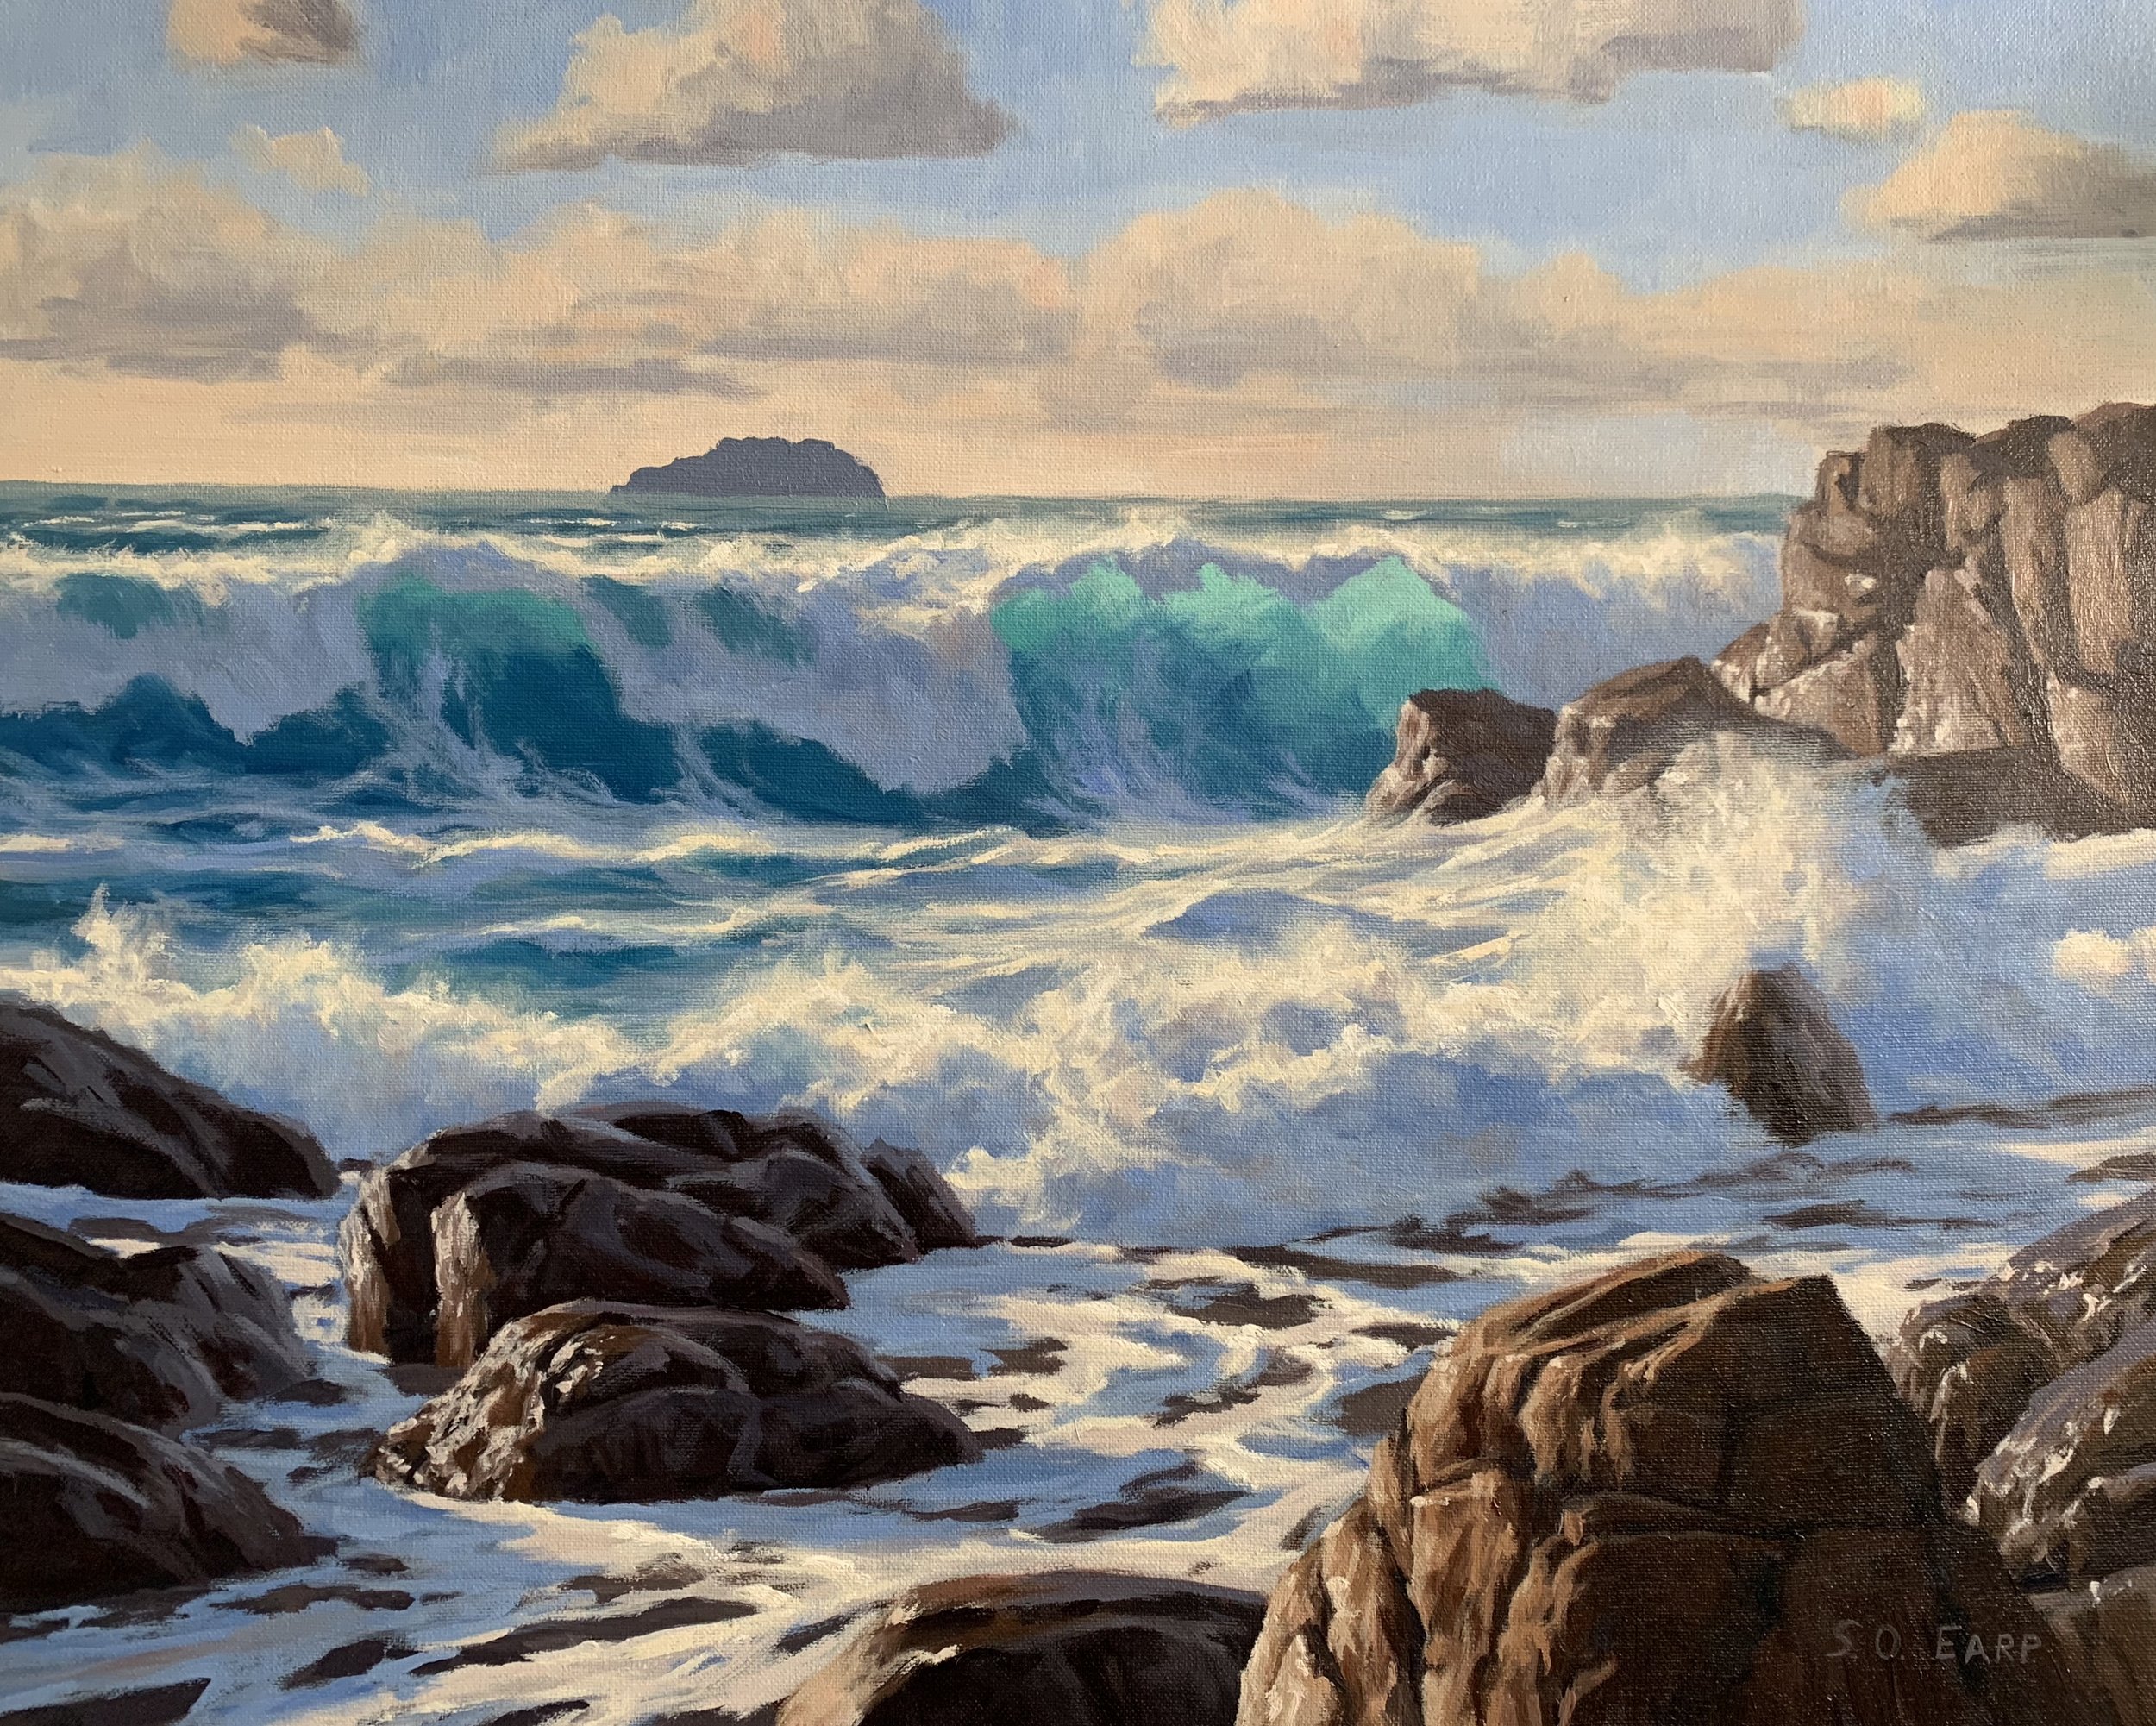 Wild Sea - Guernsey - seascape oil painting - Samuel Earp.jpg